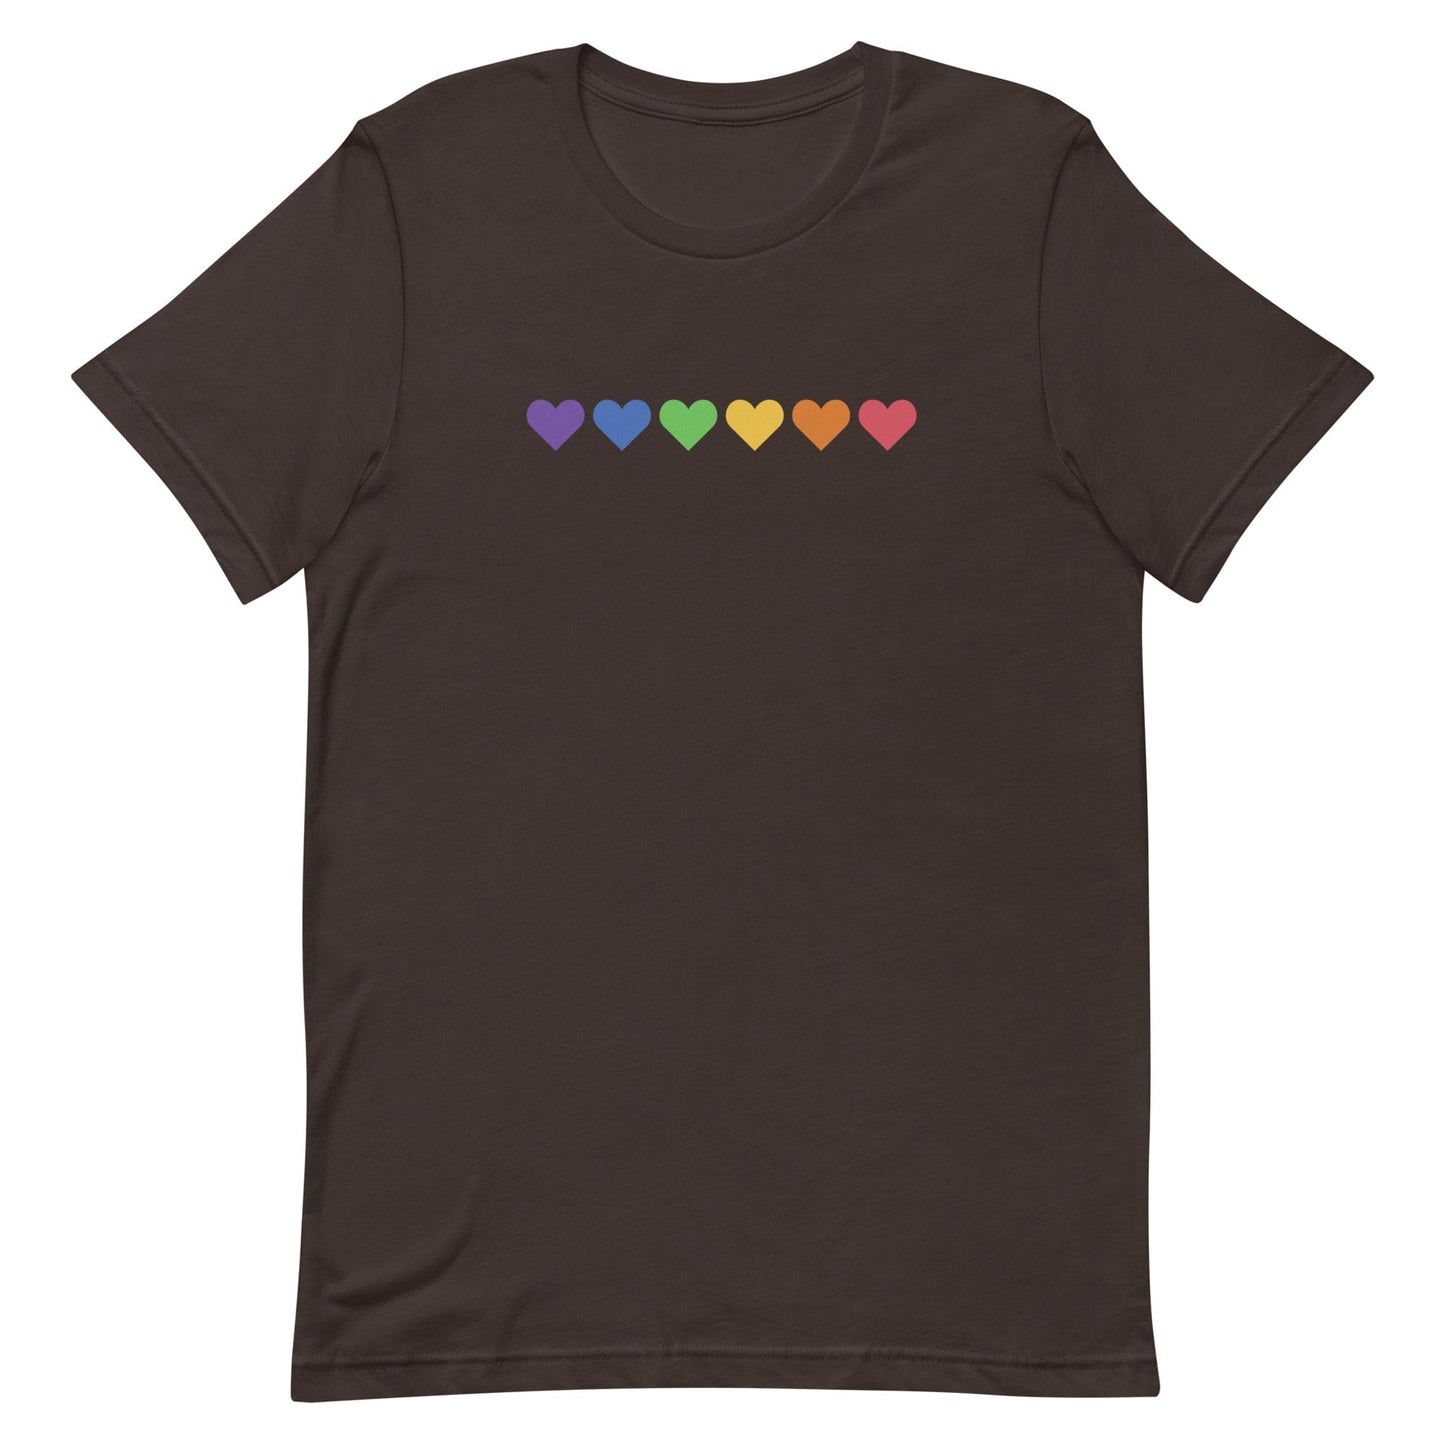 front-brown-genderless-hearts-pride-t-shirt-by-feminist-define